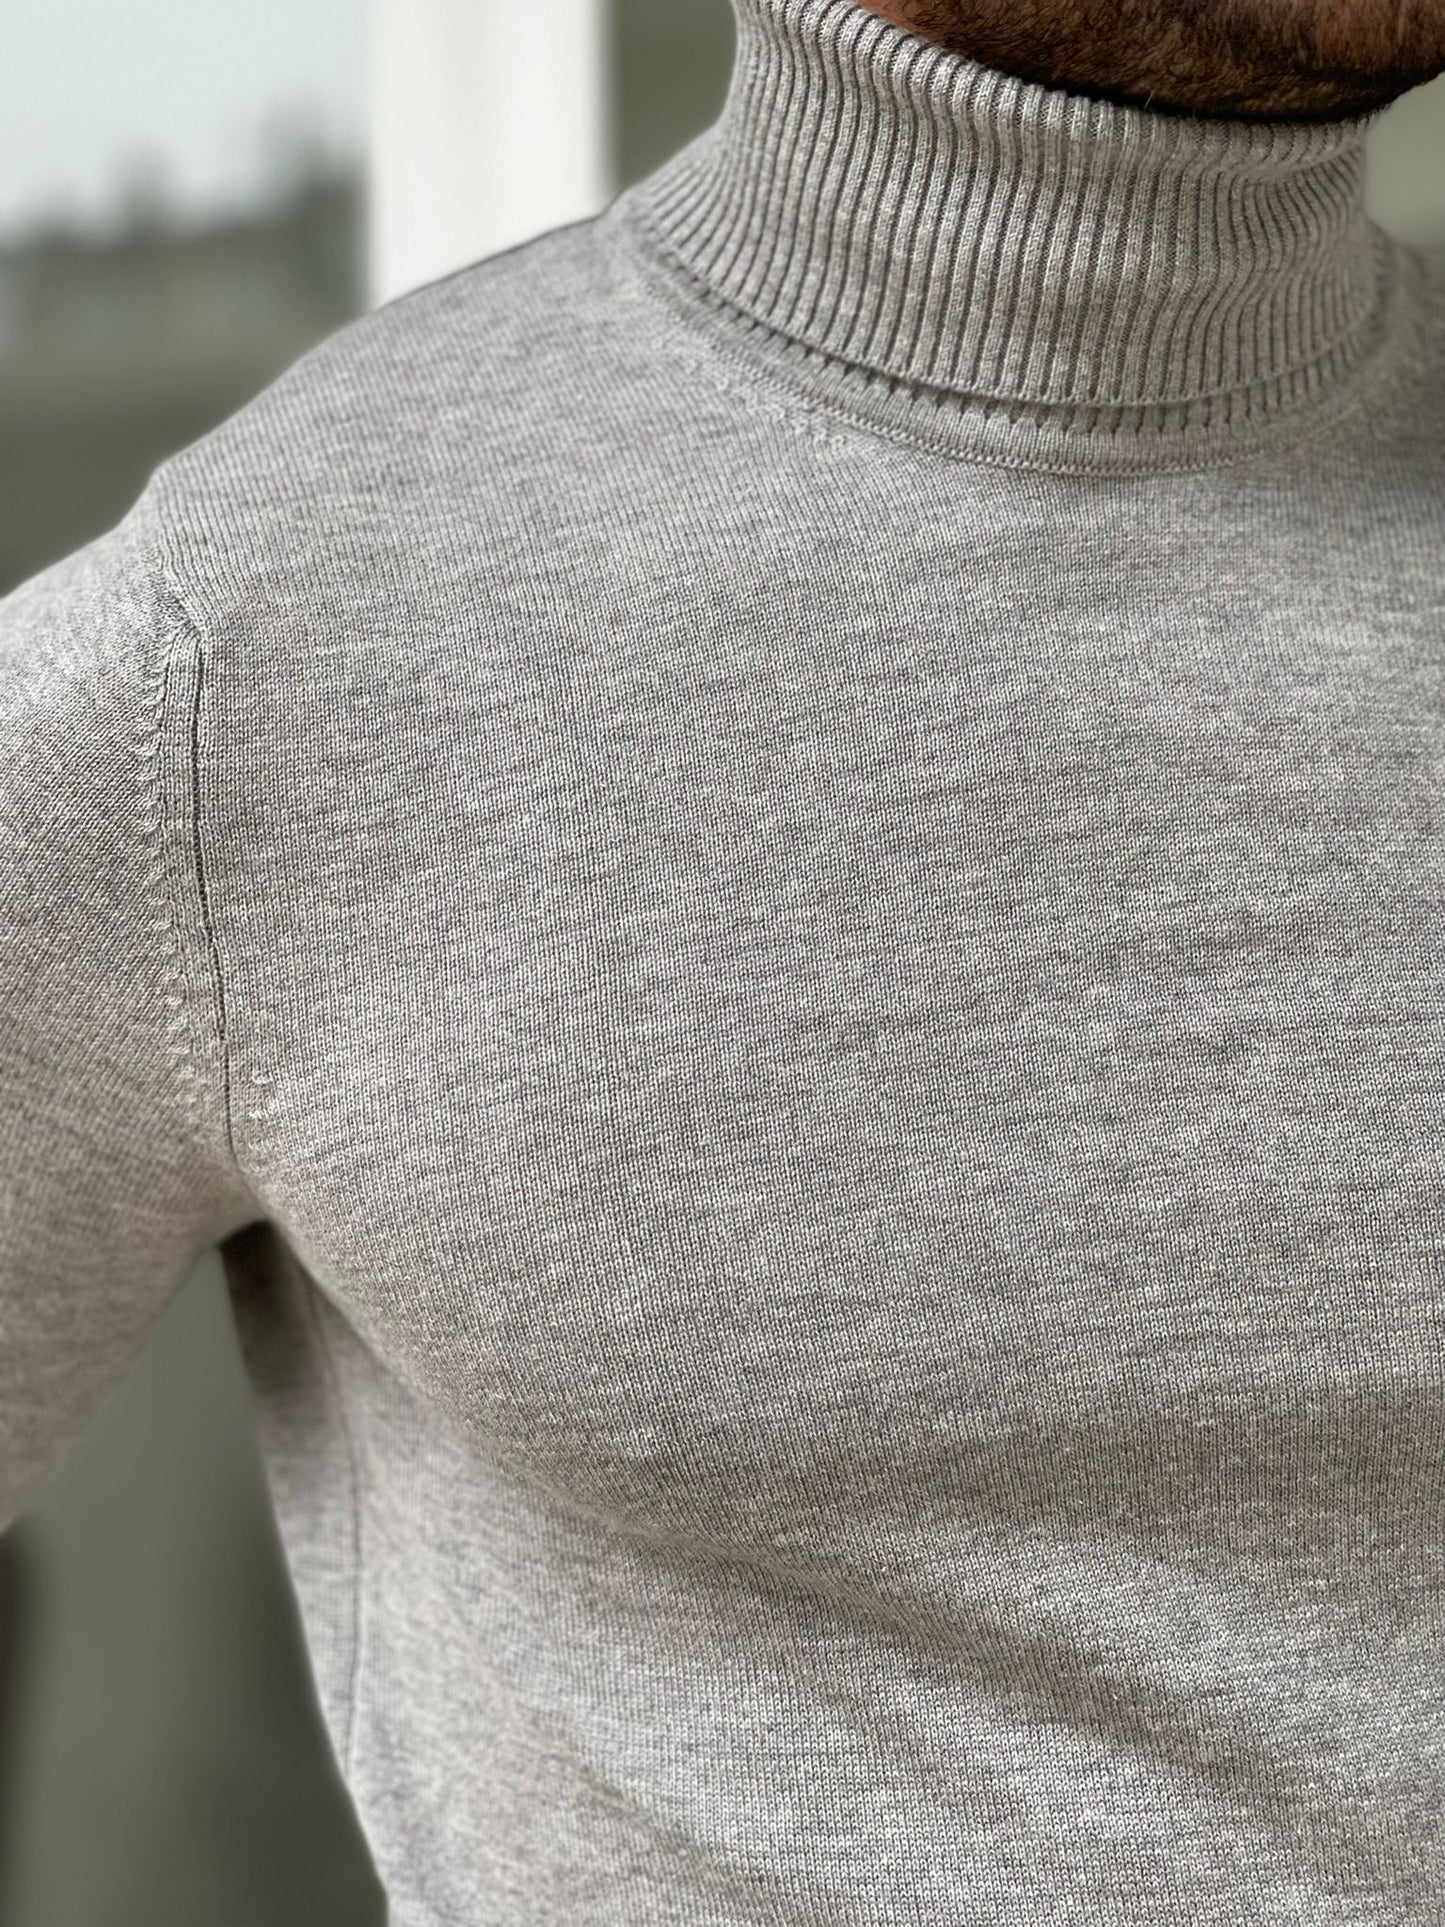 Capel Gray Slim Fit Turtleneck Sweater